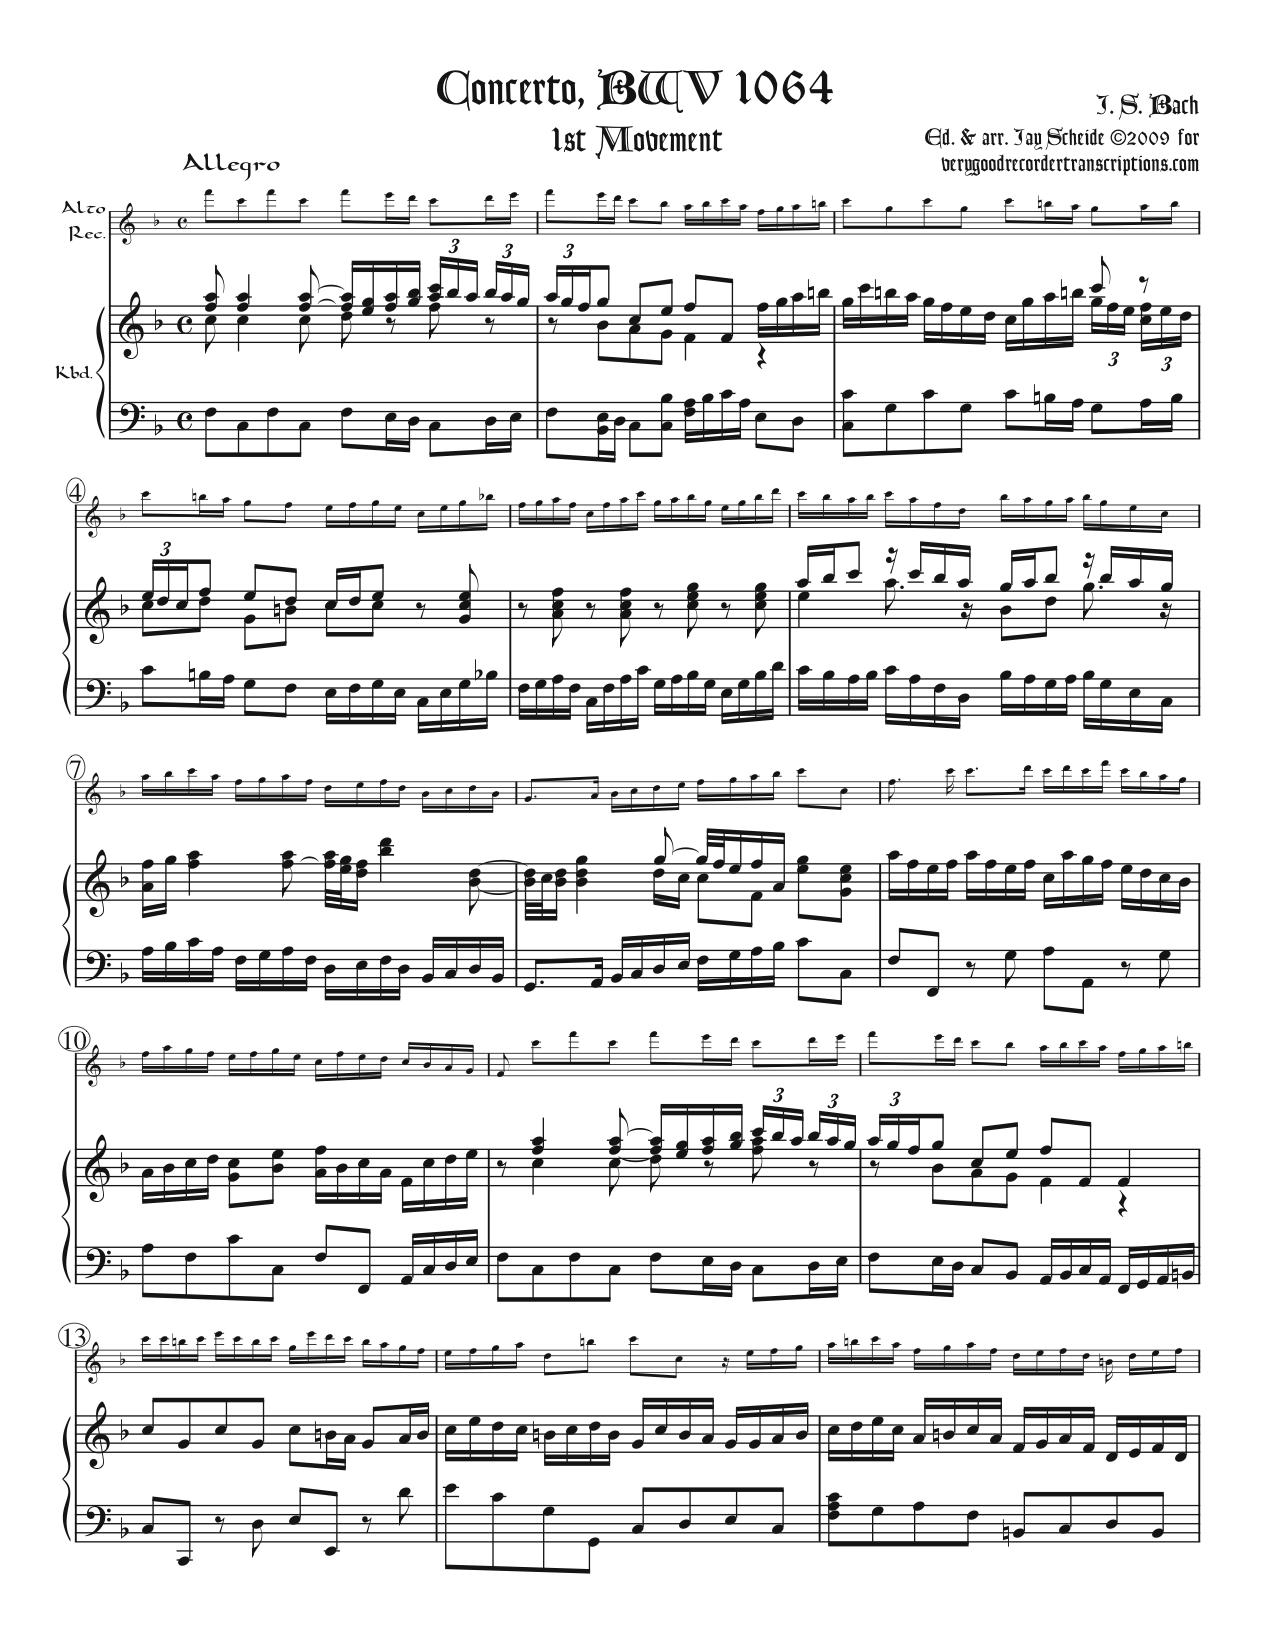 Concerto No. 2 for 3 Harpsichords, BWV 1064